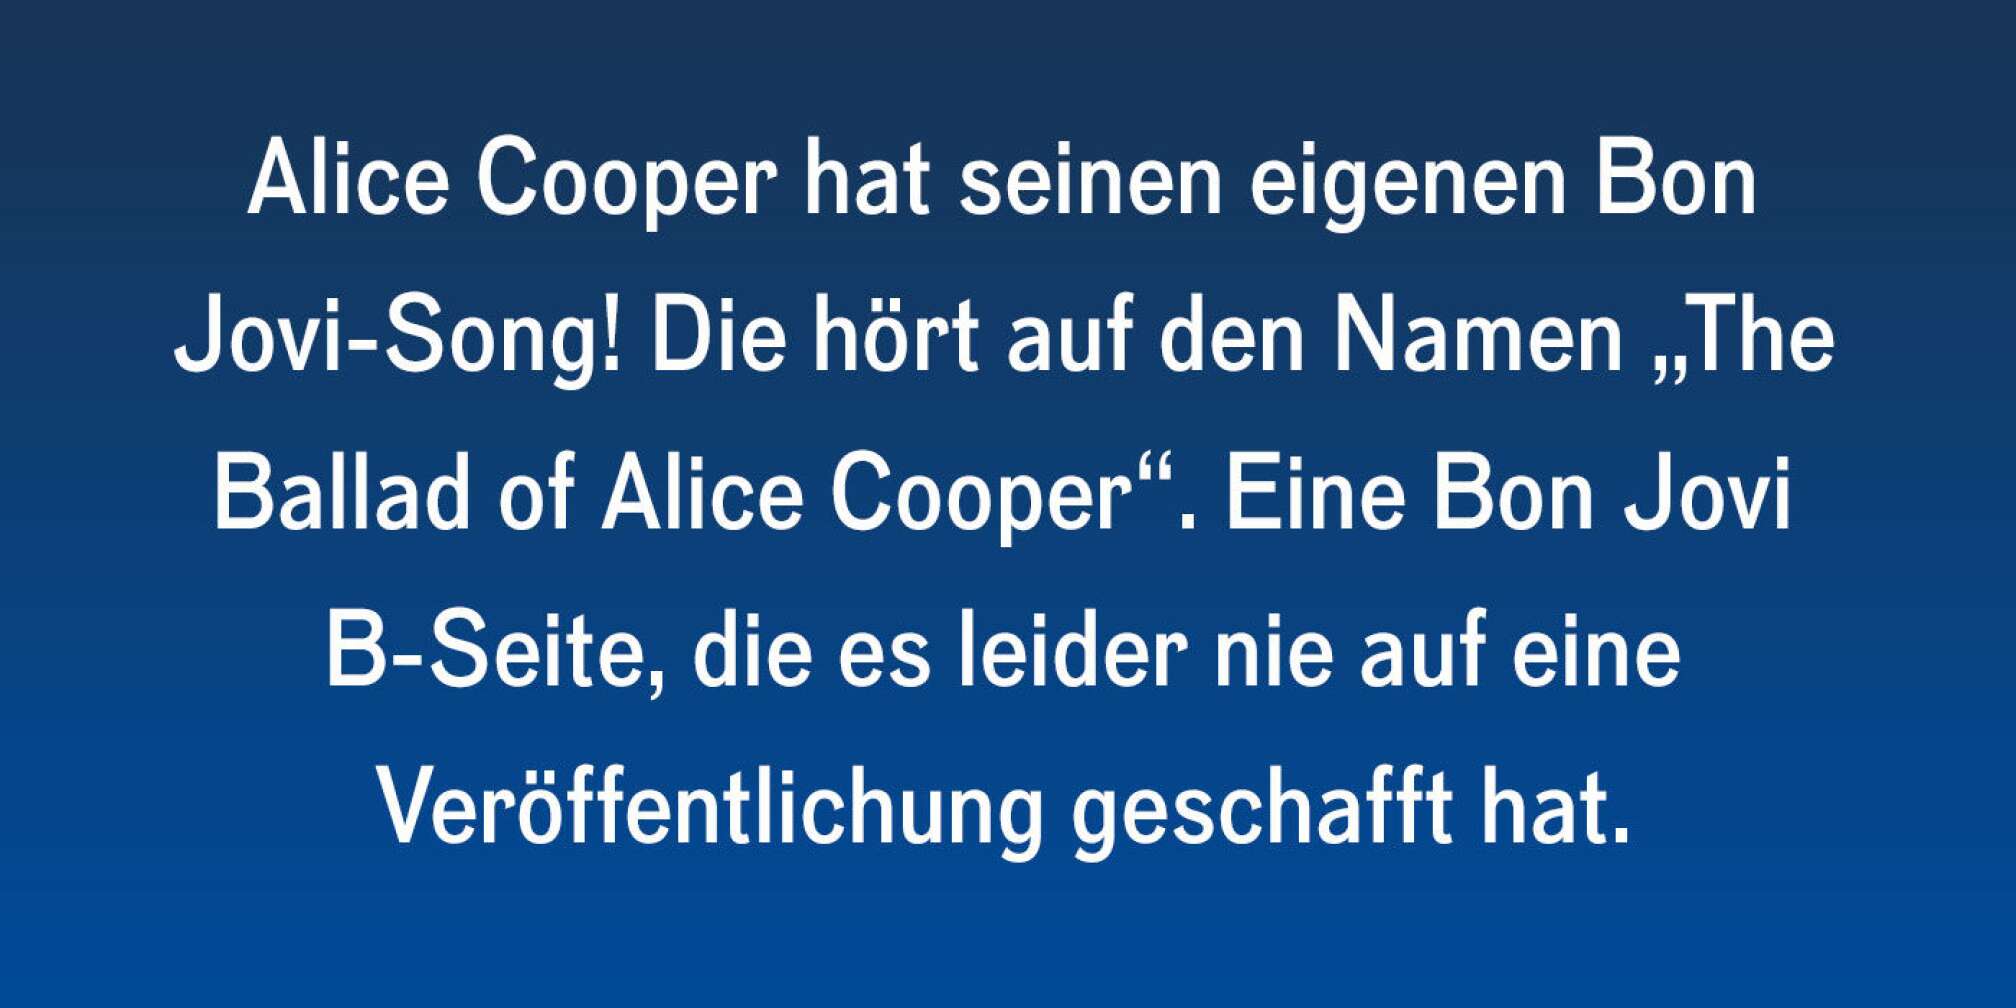 10 Fakten über Alice Cooper #8